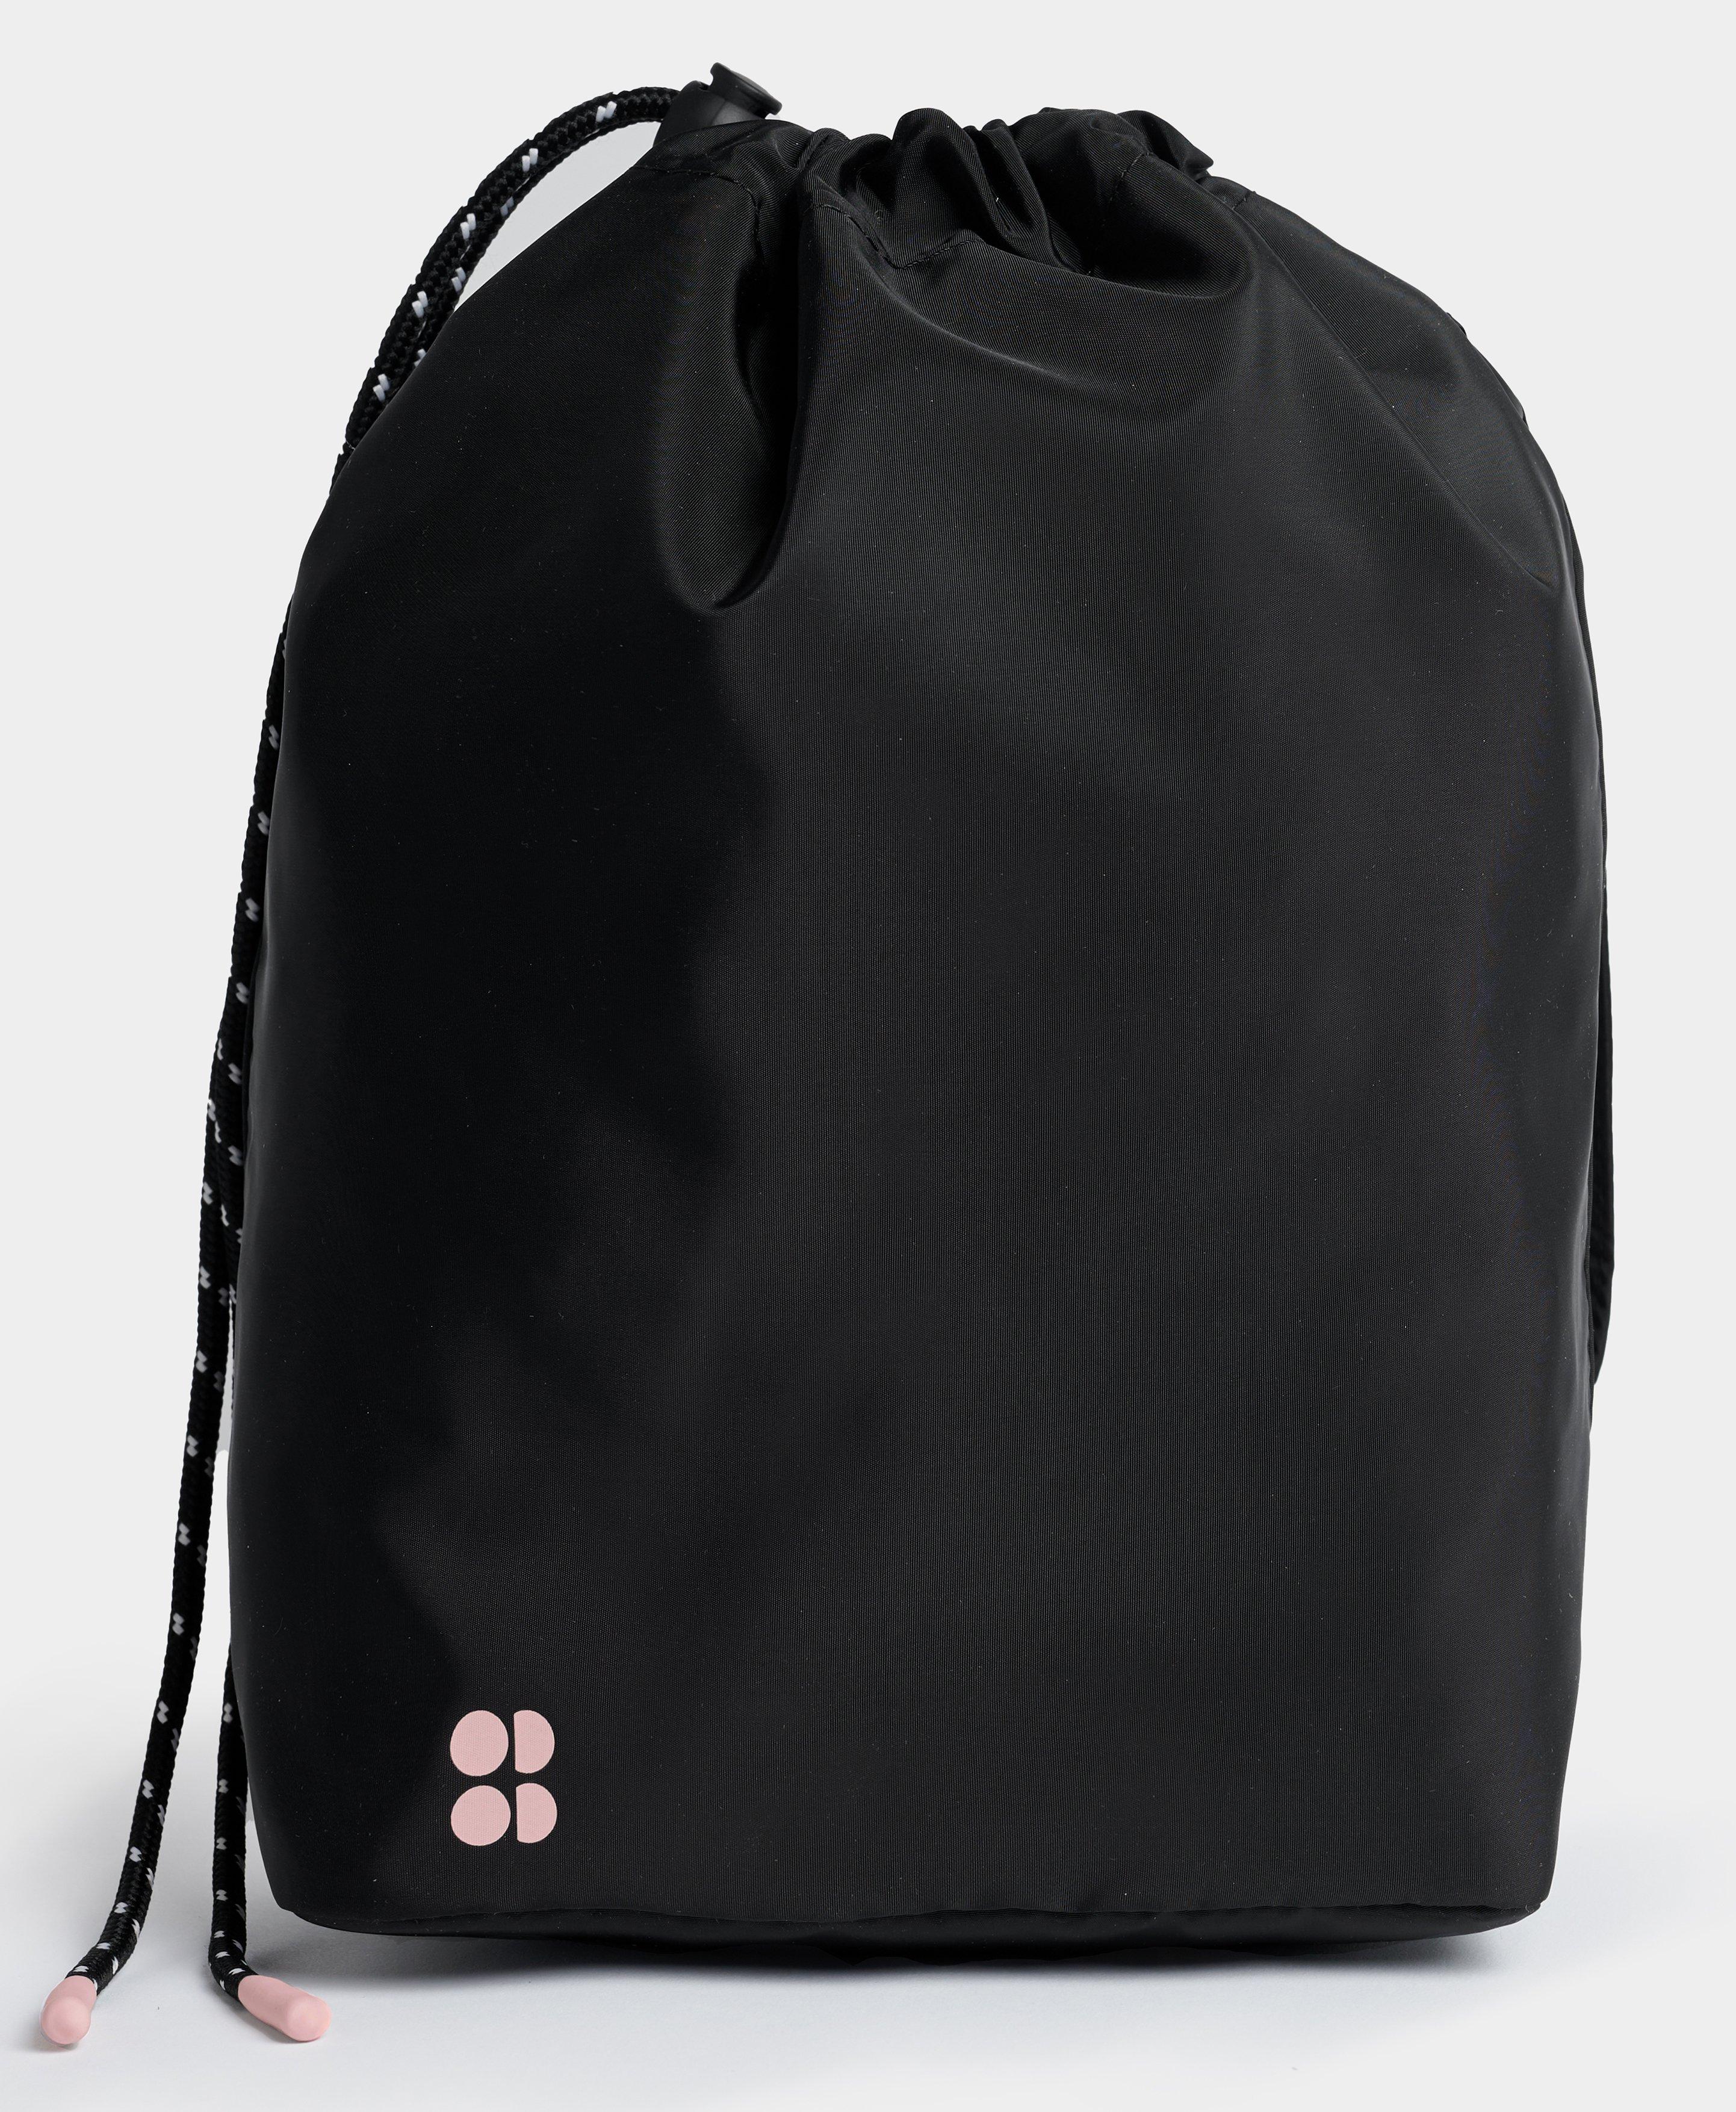 Sweaty Betty, Bags, Nwt Sweaty Betty Gray Multi Use Backpack Yoga Bag